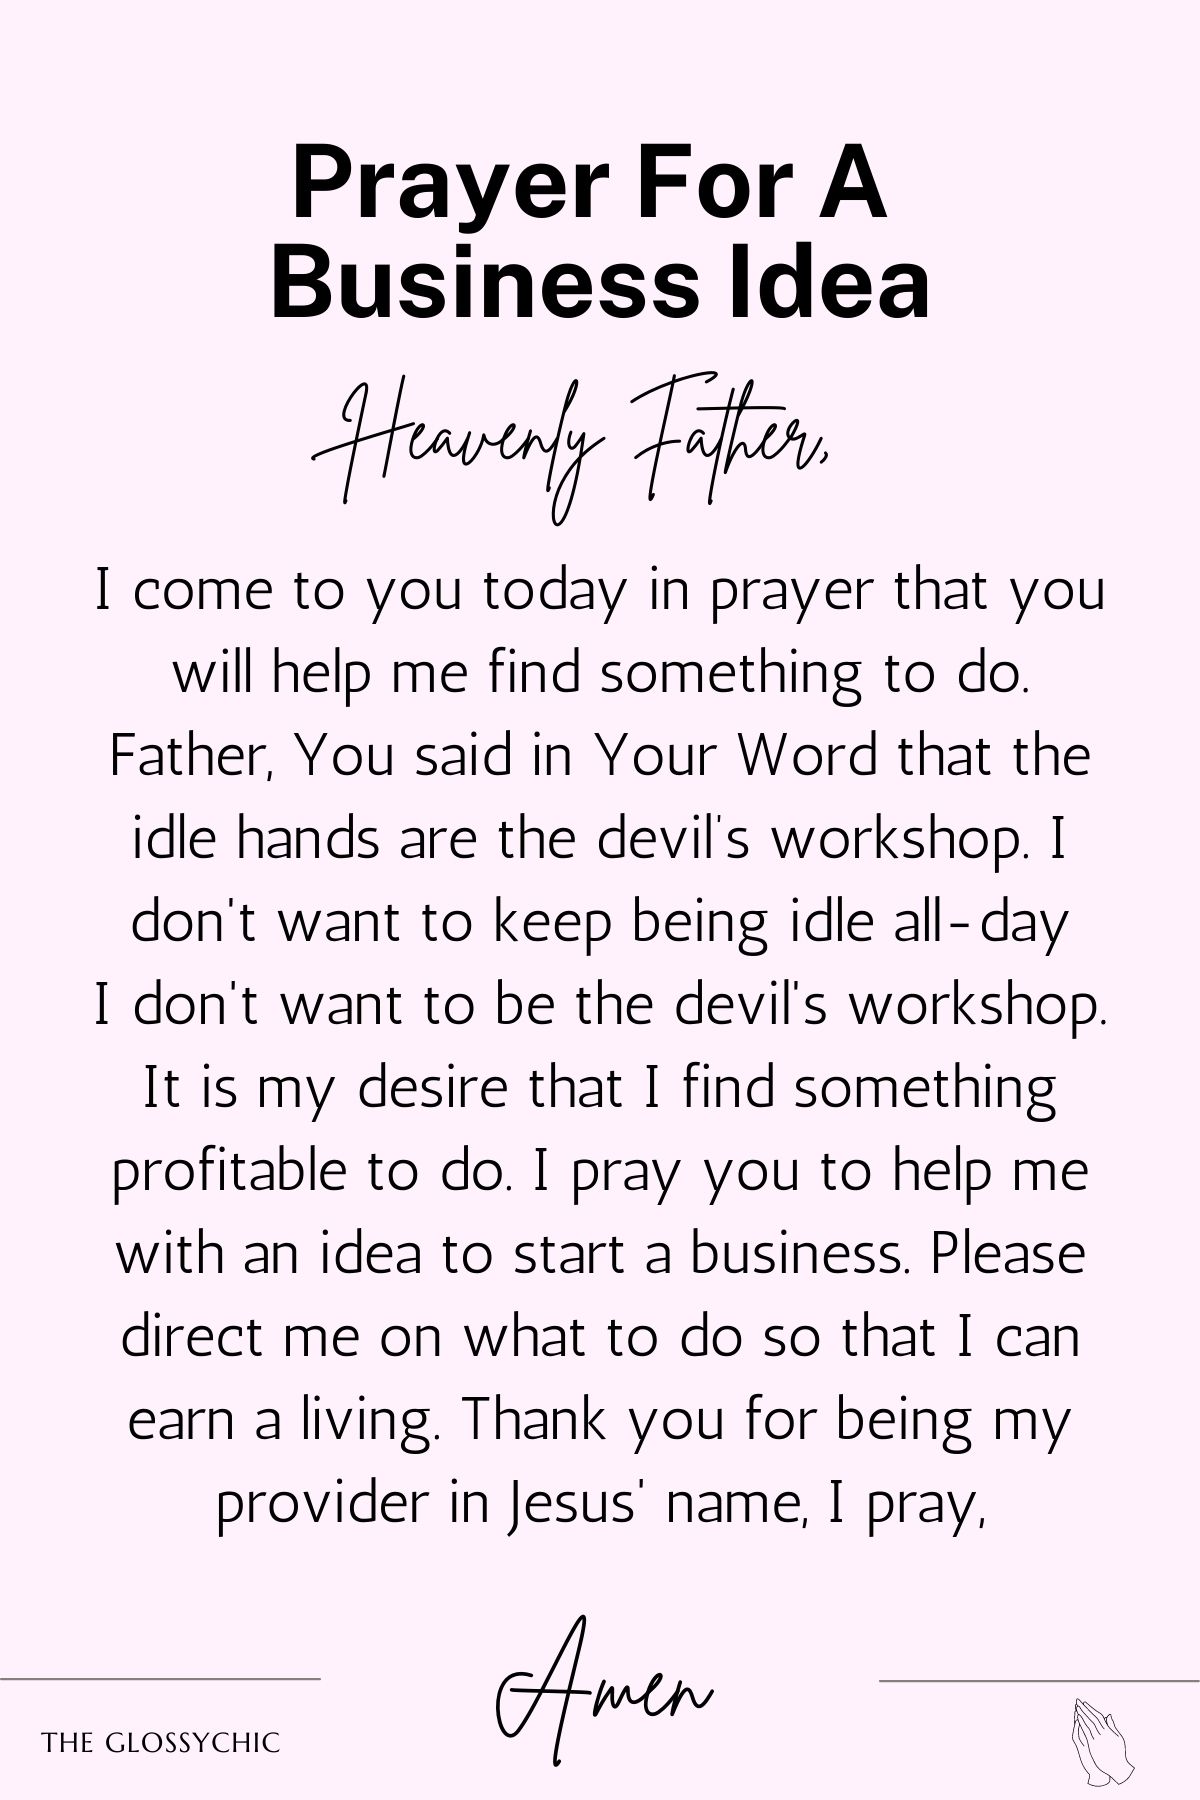 Prayer for a business idea